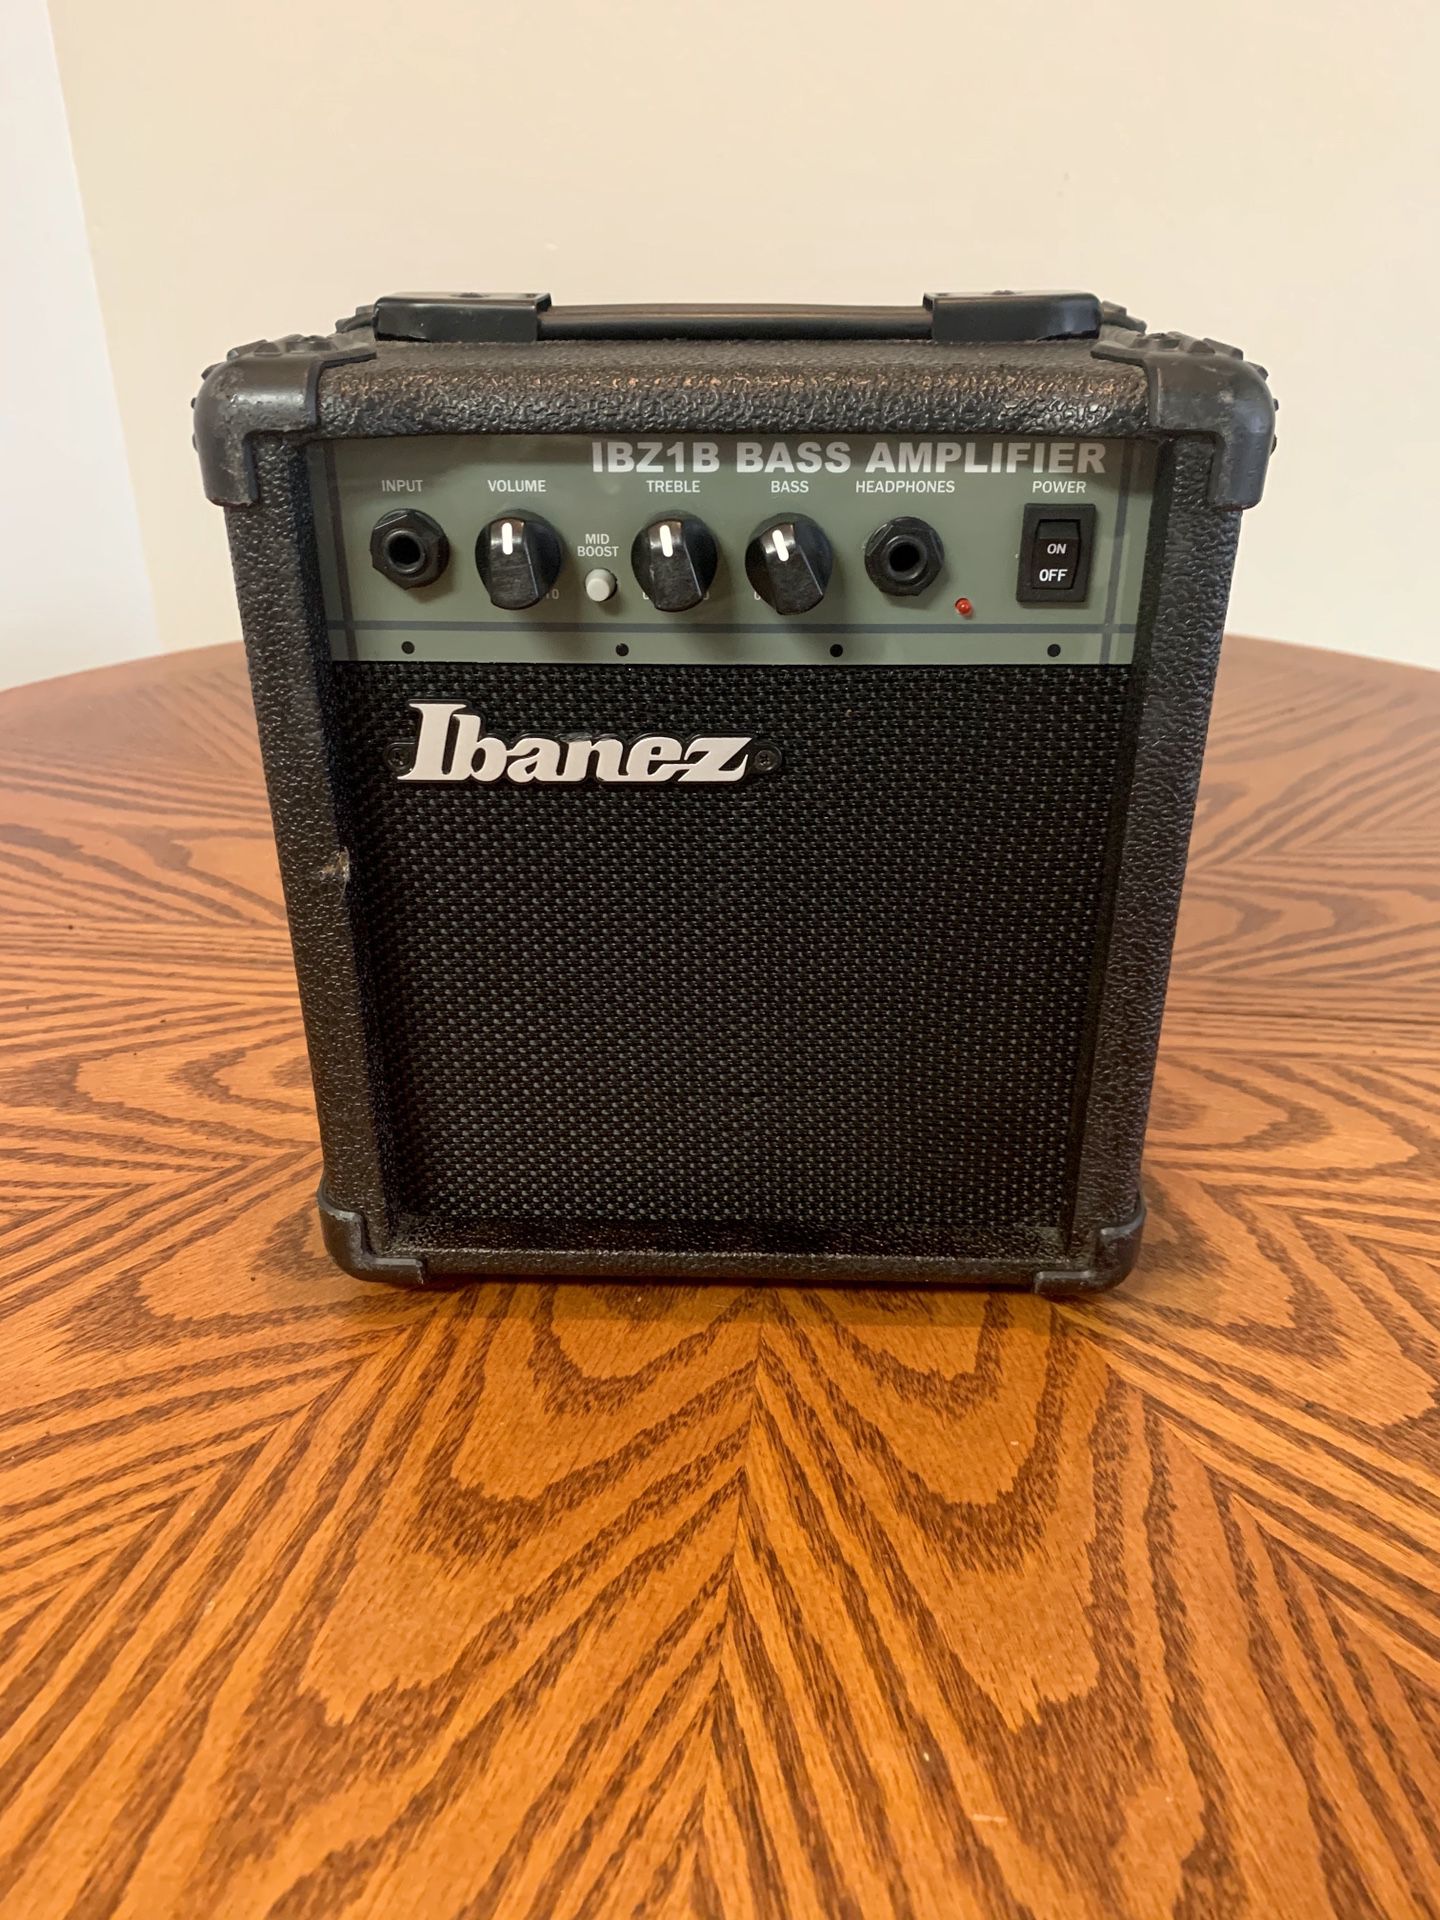 Ibanez bass amplifier